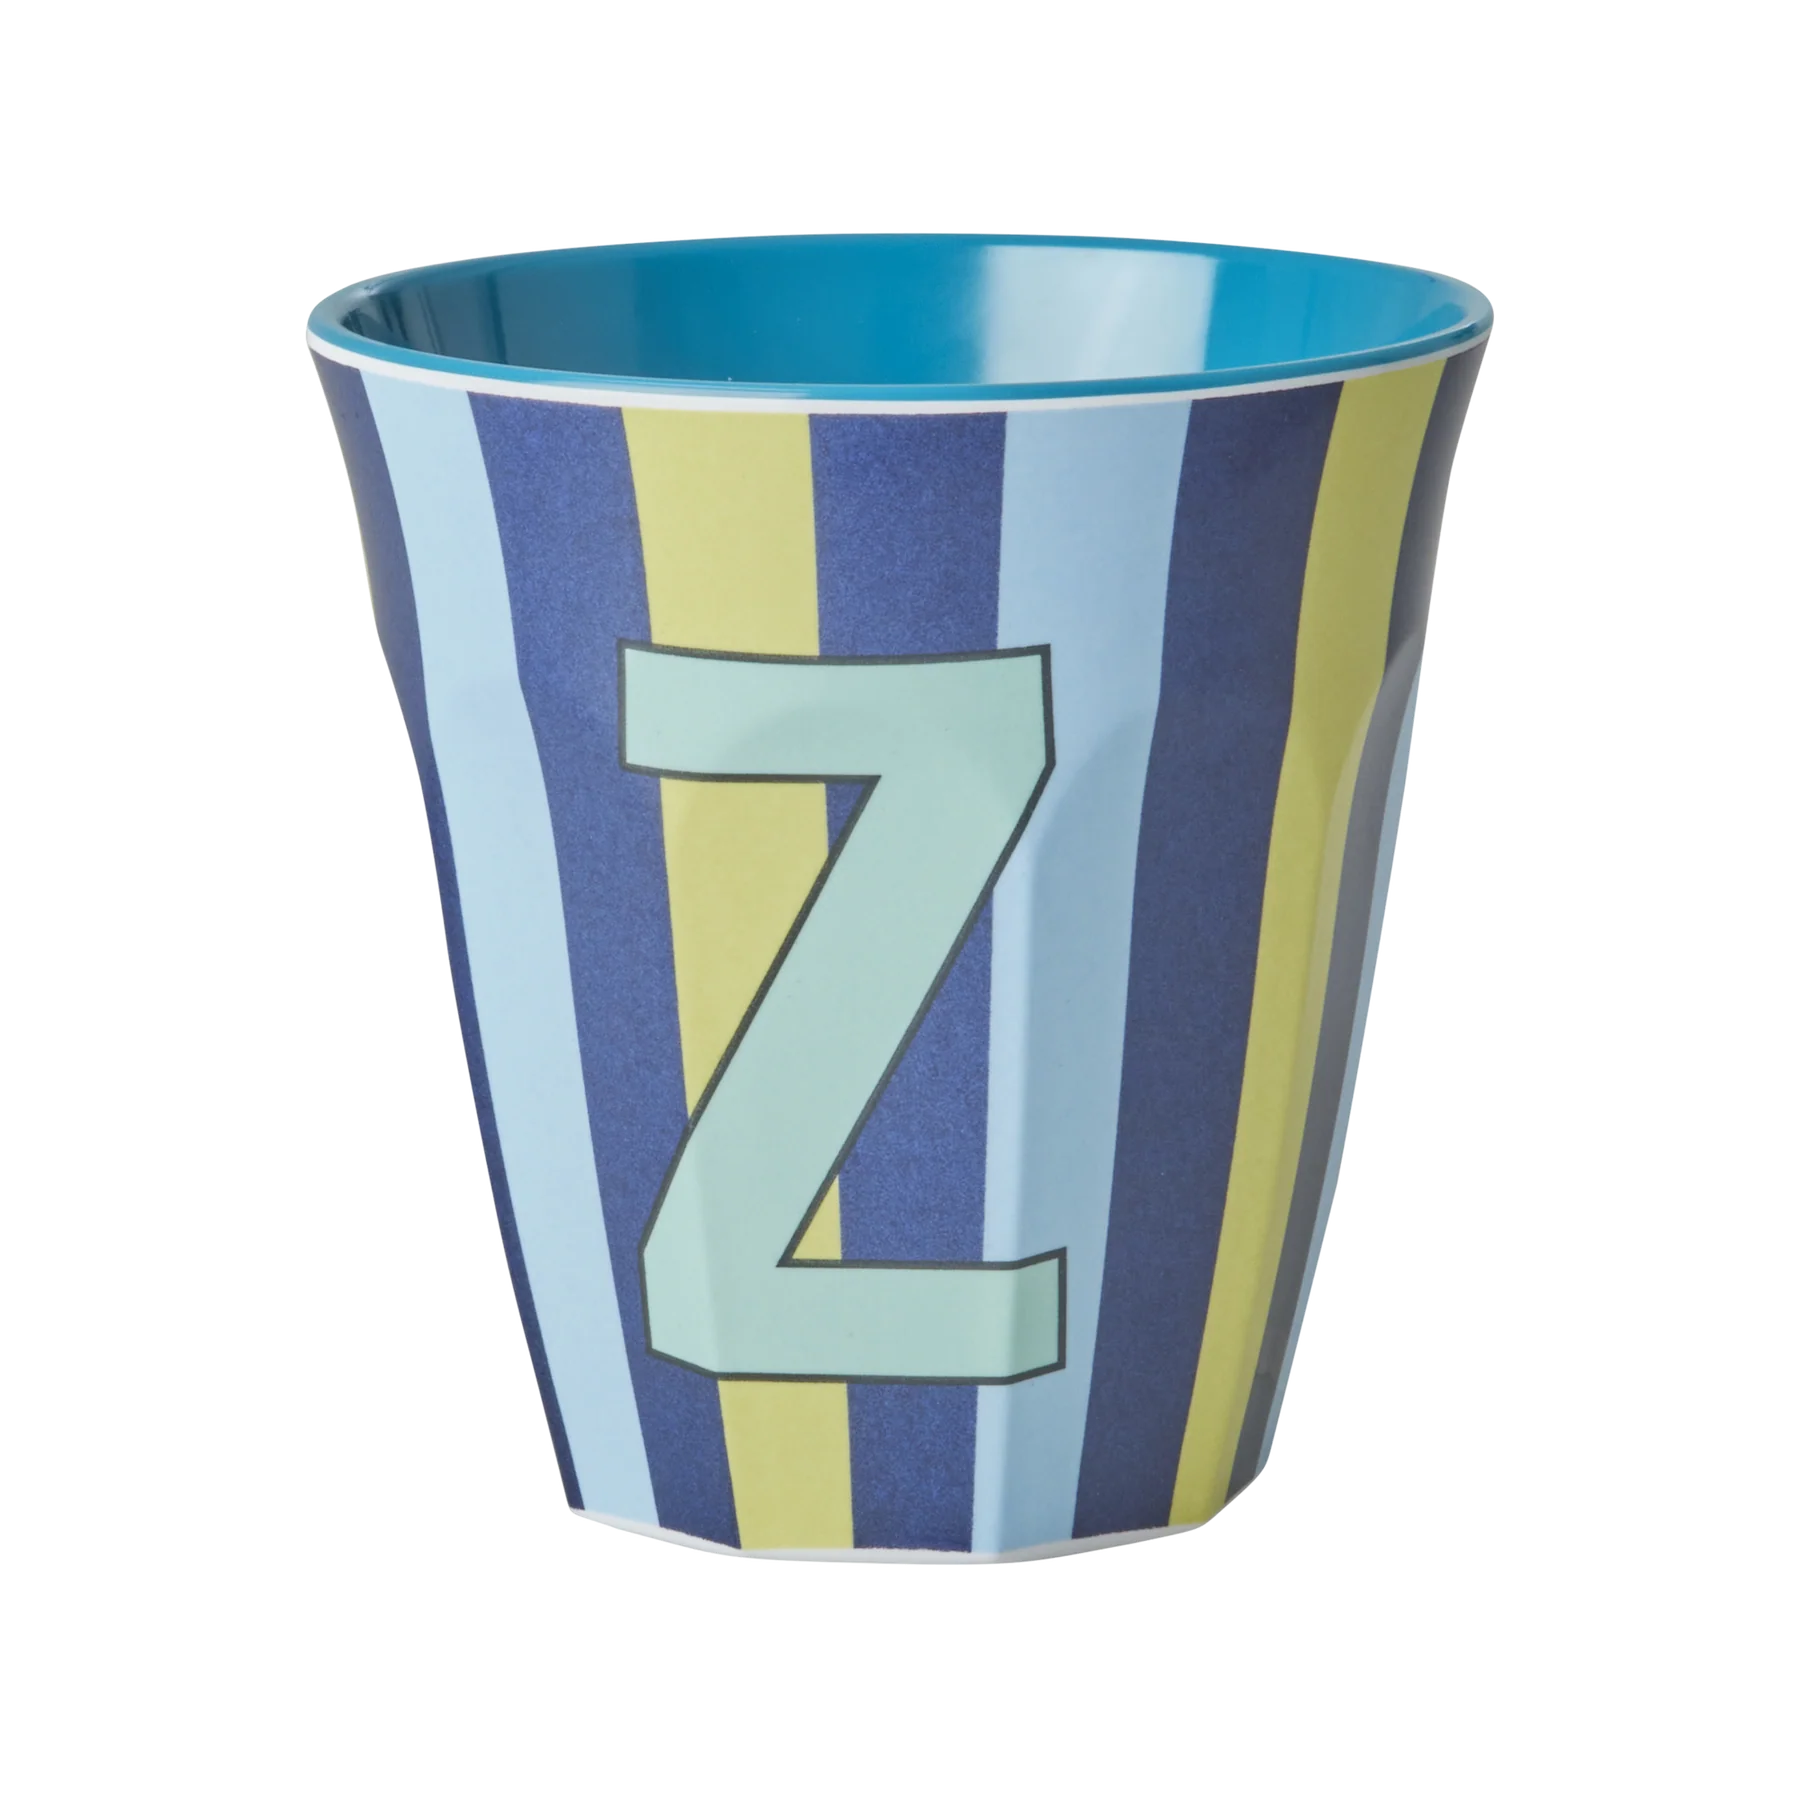 Z Blue Stripe Melamine Cup - Rice DK